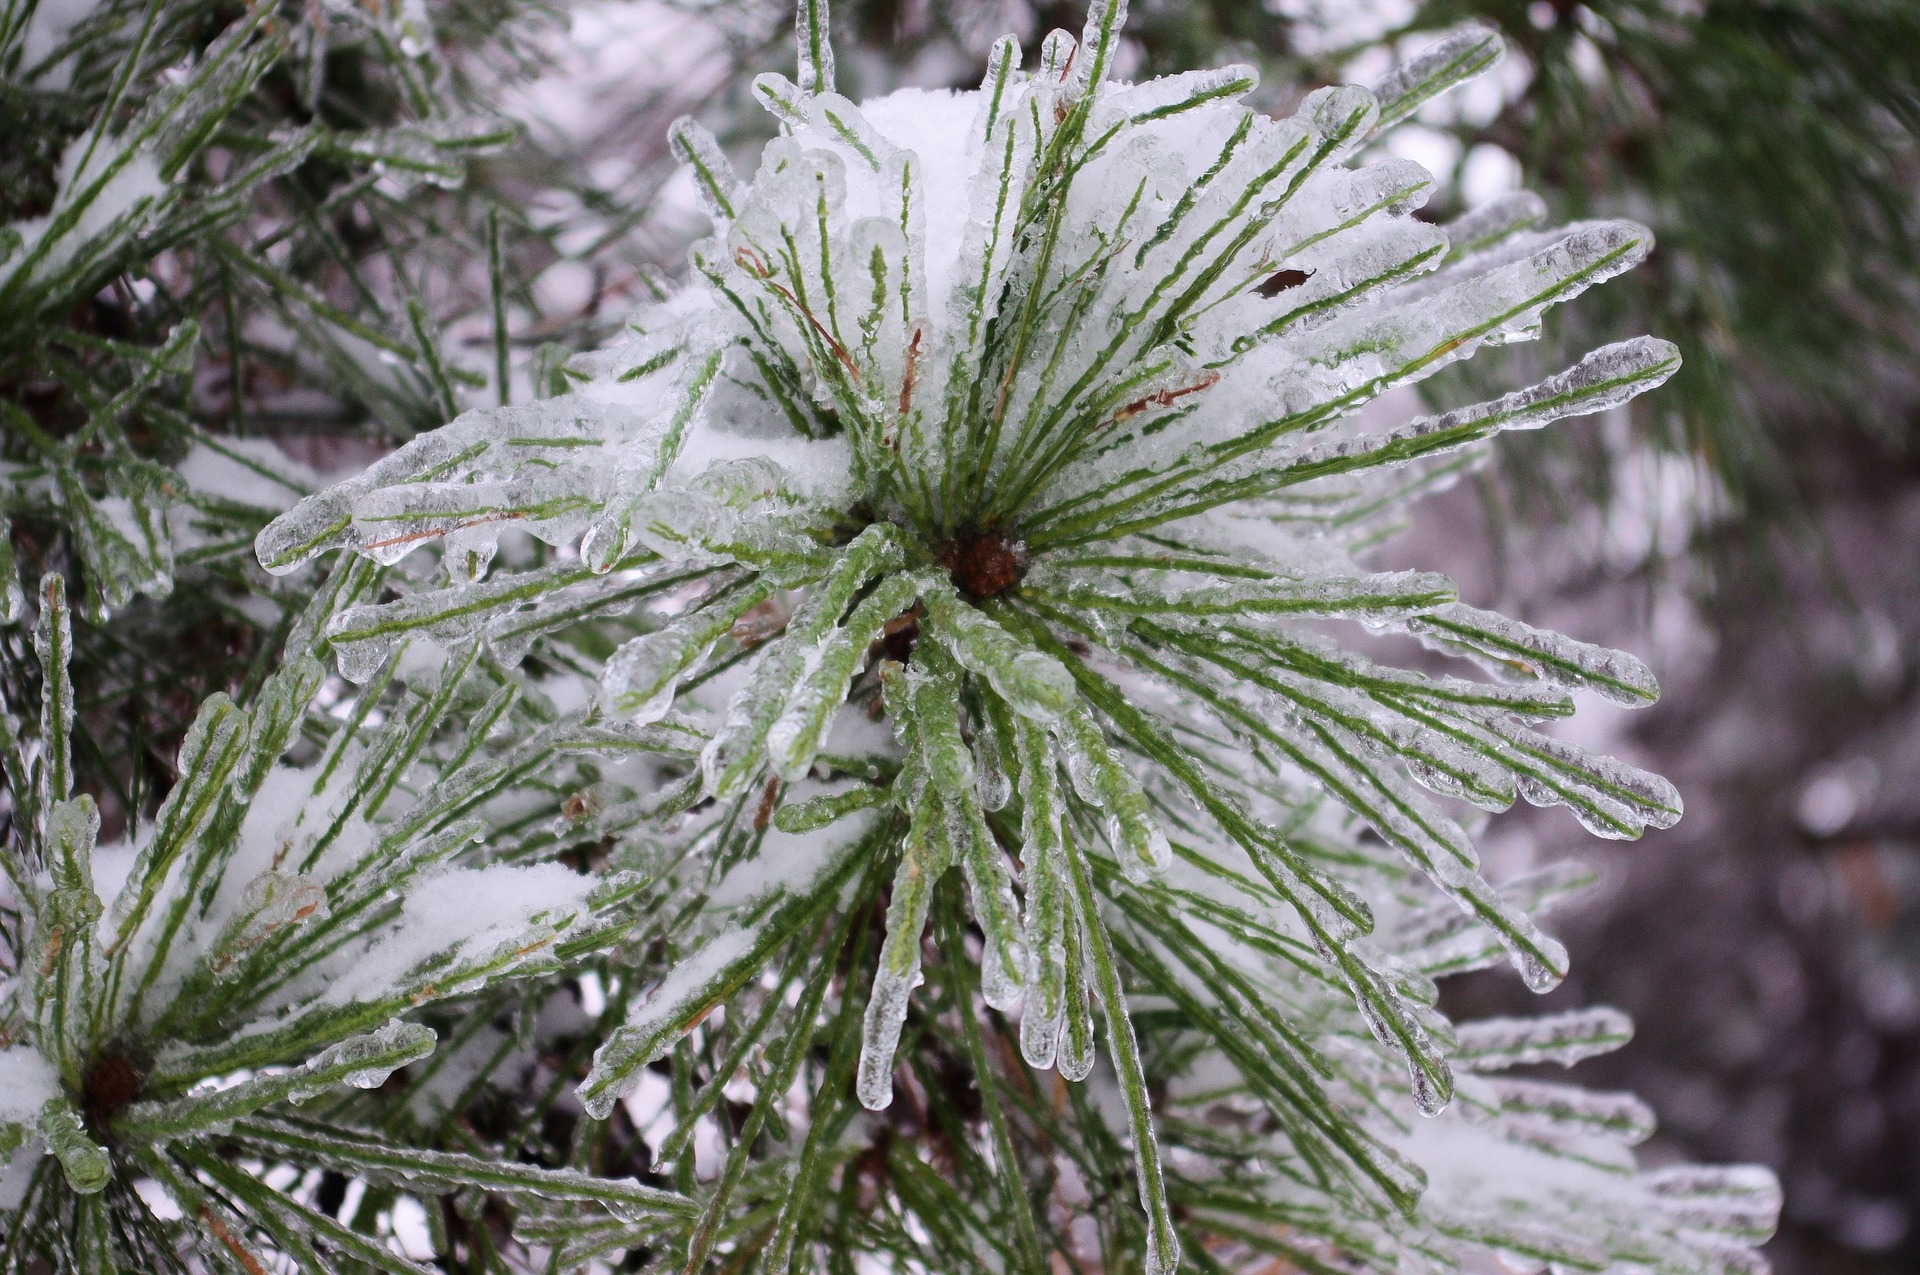 Iced Pine Needles to help keep cool